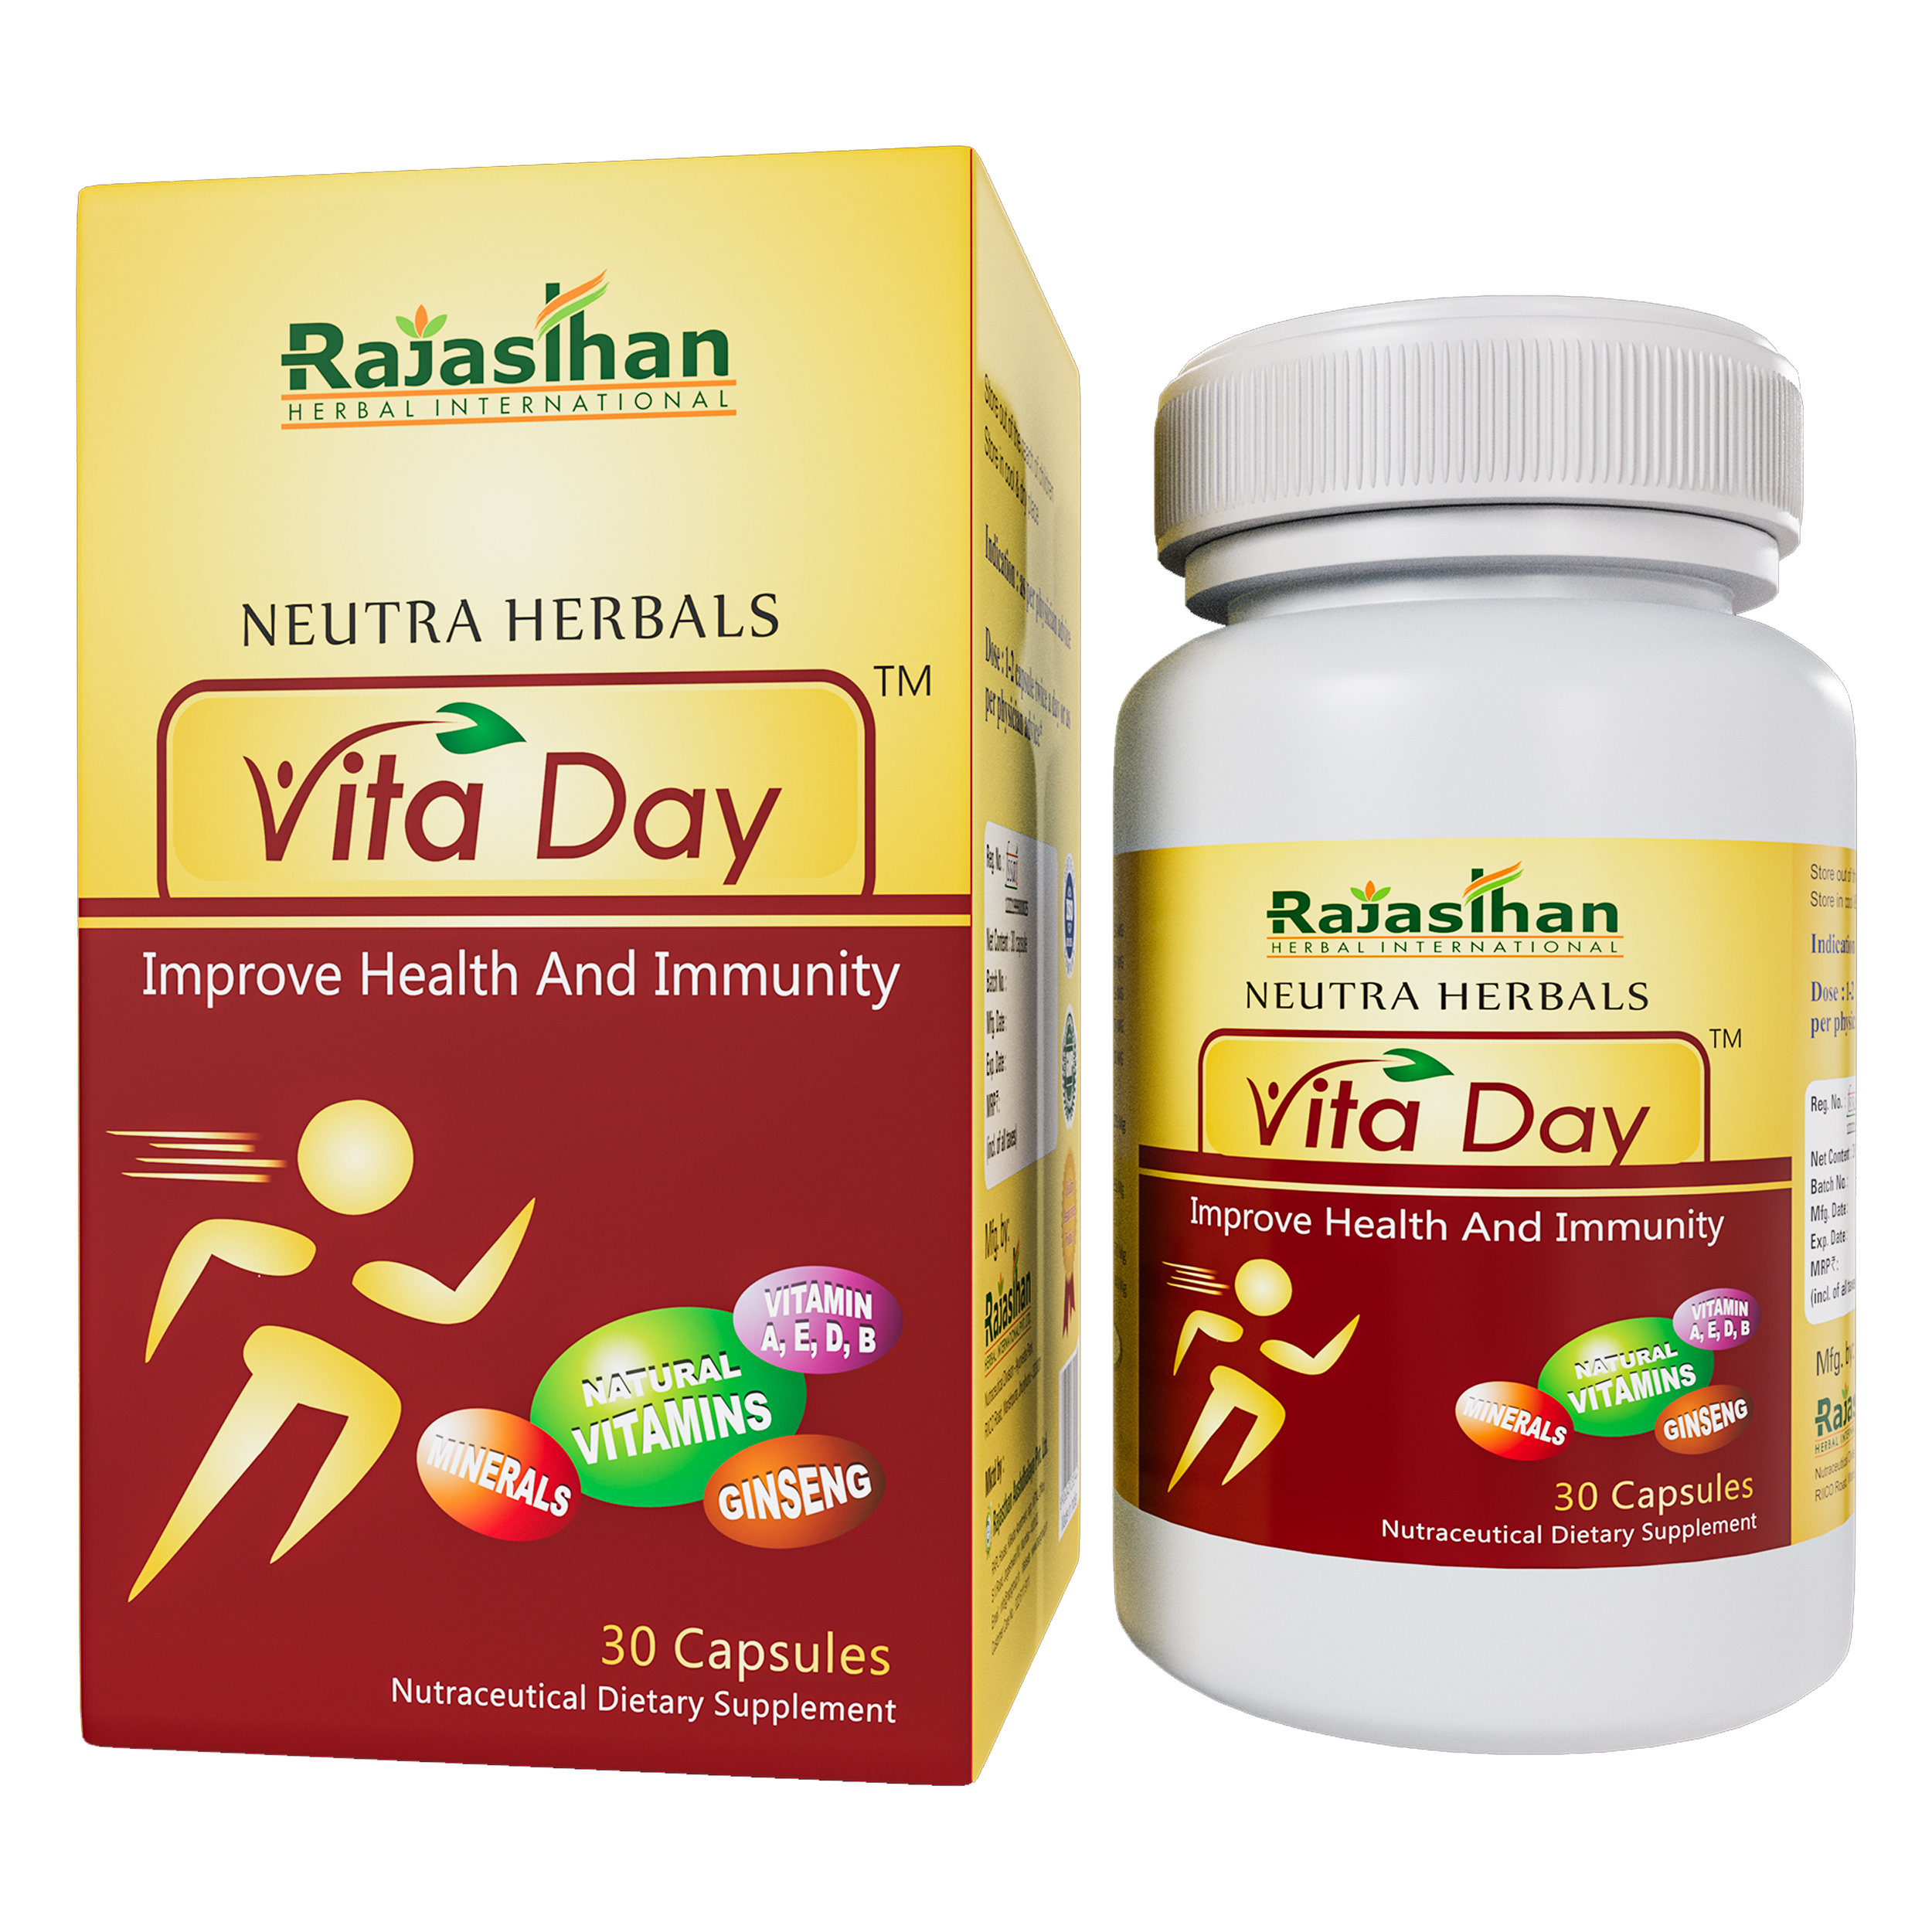 Vita Day 30 Capsules Rajasthan Herbal International